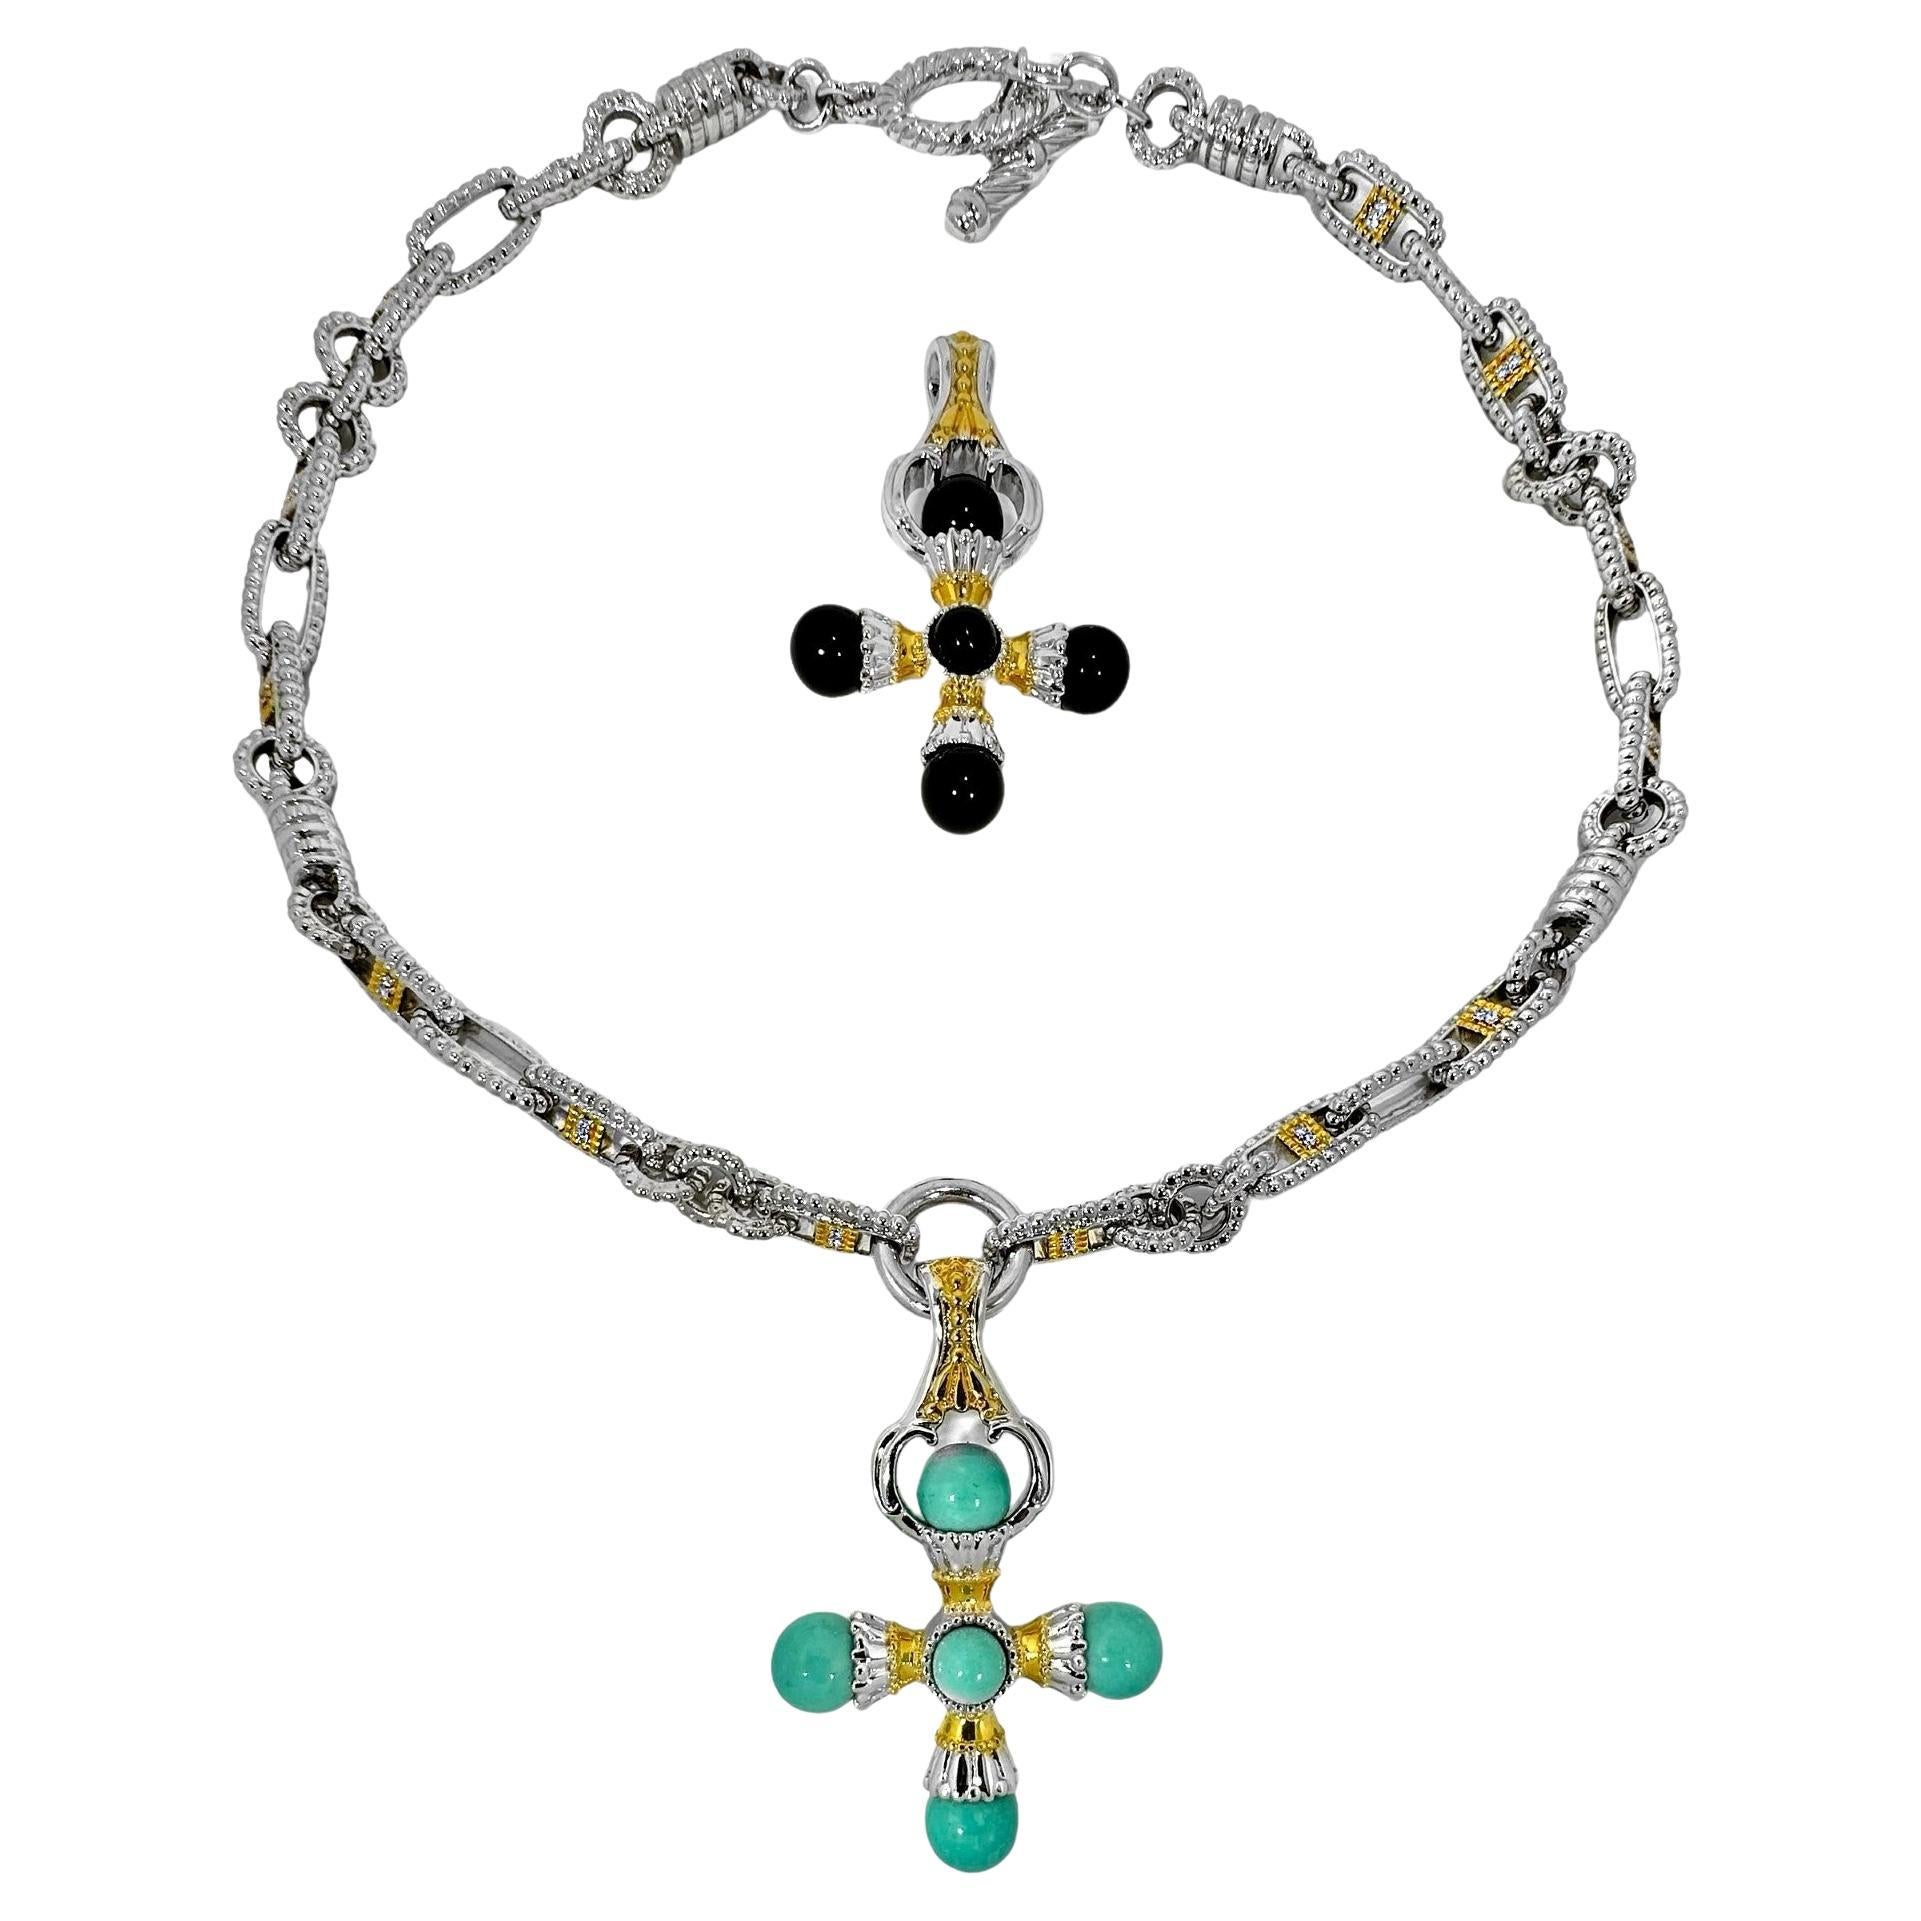 14k Diamond Toggle Necklace w/ Interchangeable Turquoise & Onyx Crosses    